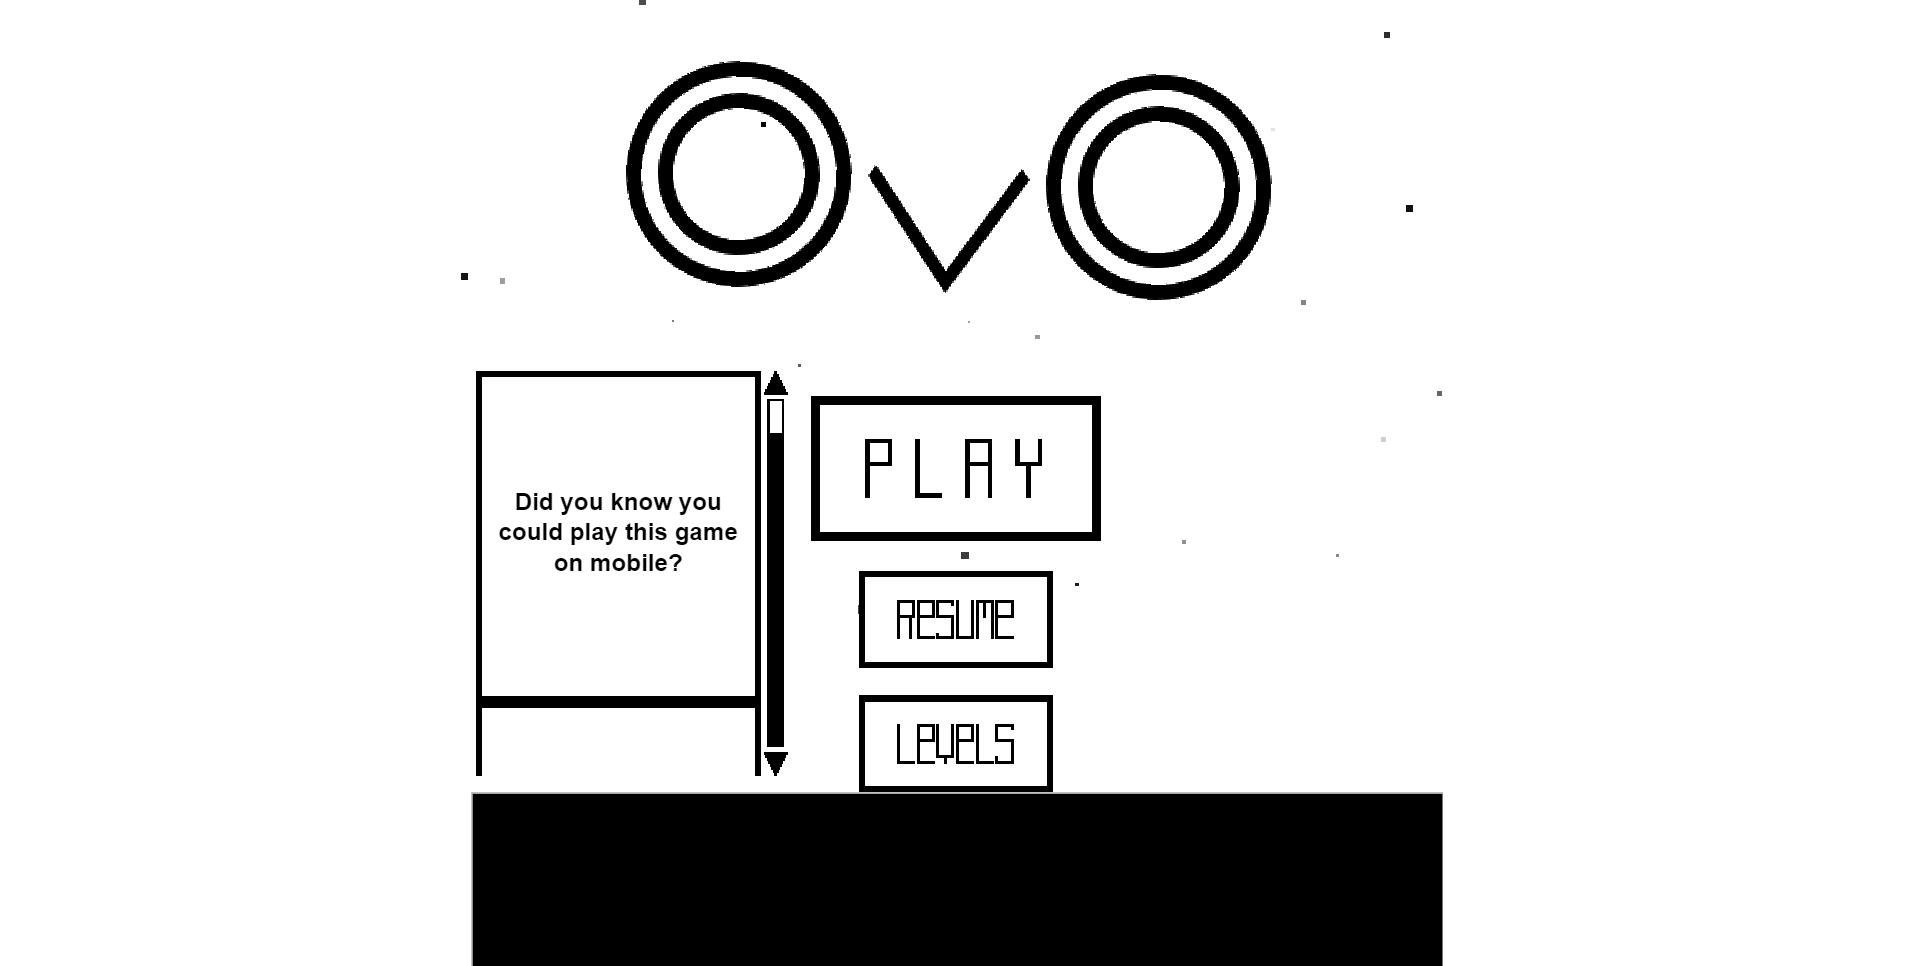 Play On OVO Game